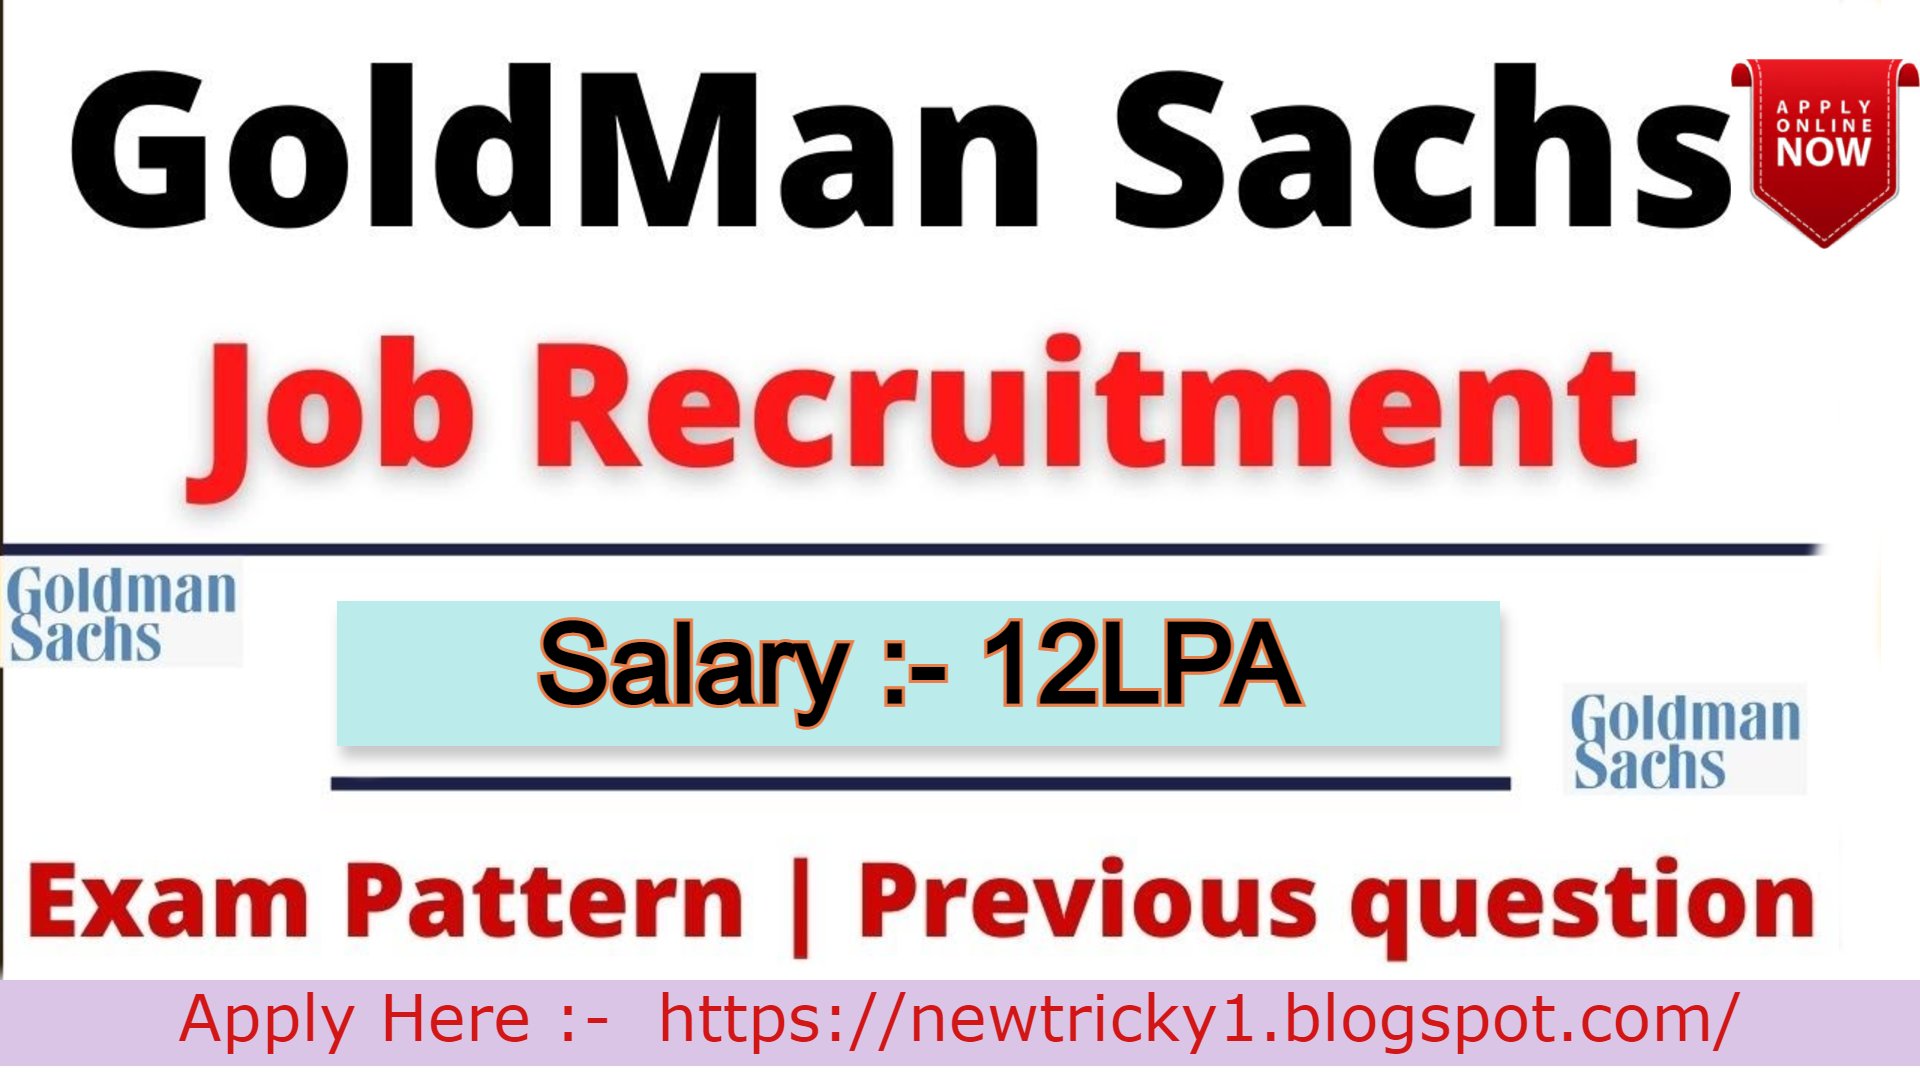 goldman-sachs-off-campus-hiring-2021-freshers-hiring-goldman-sachs-job-recruitment-2021